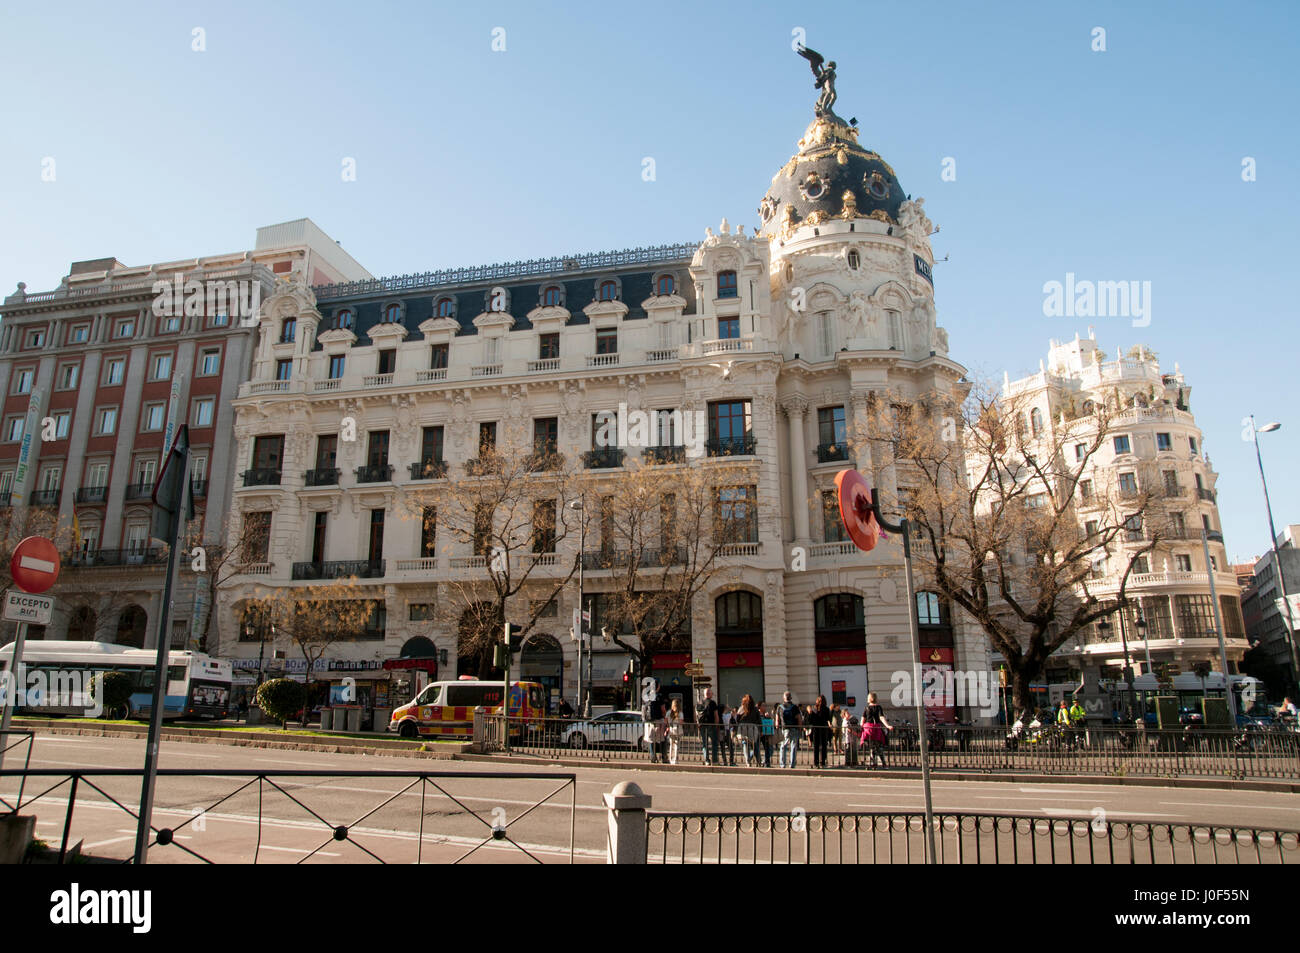 Spain, Madrid, Metropolis Building, on calle de Alcala Stock Photo